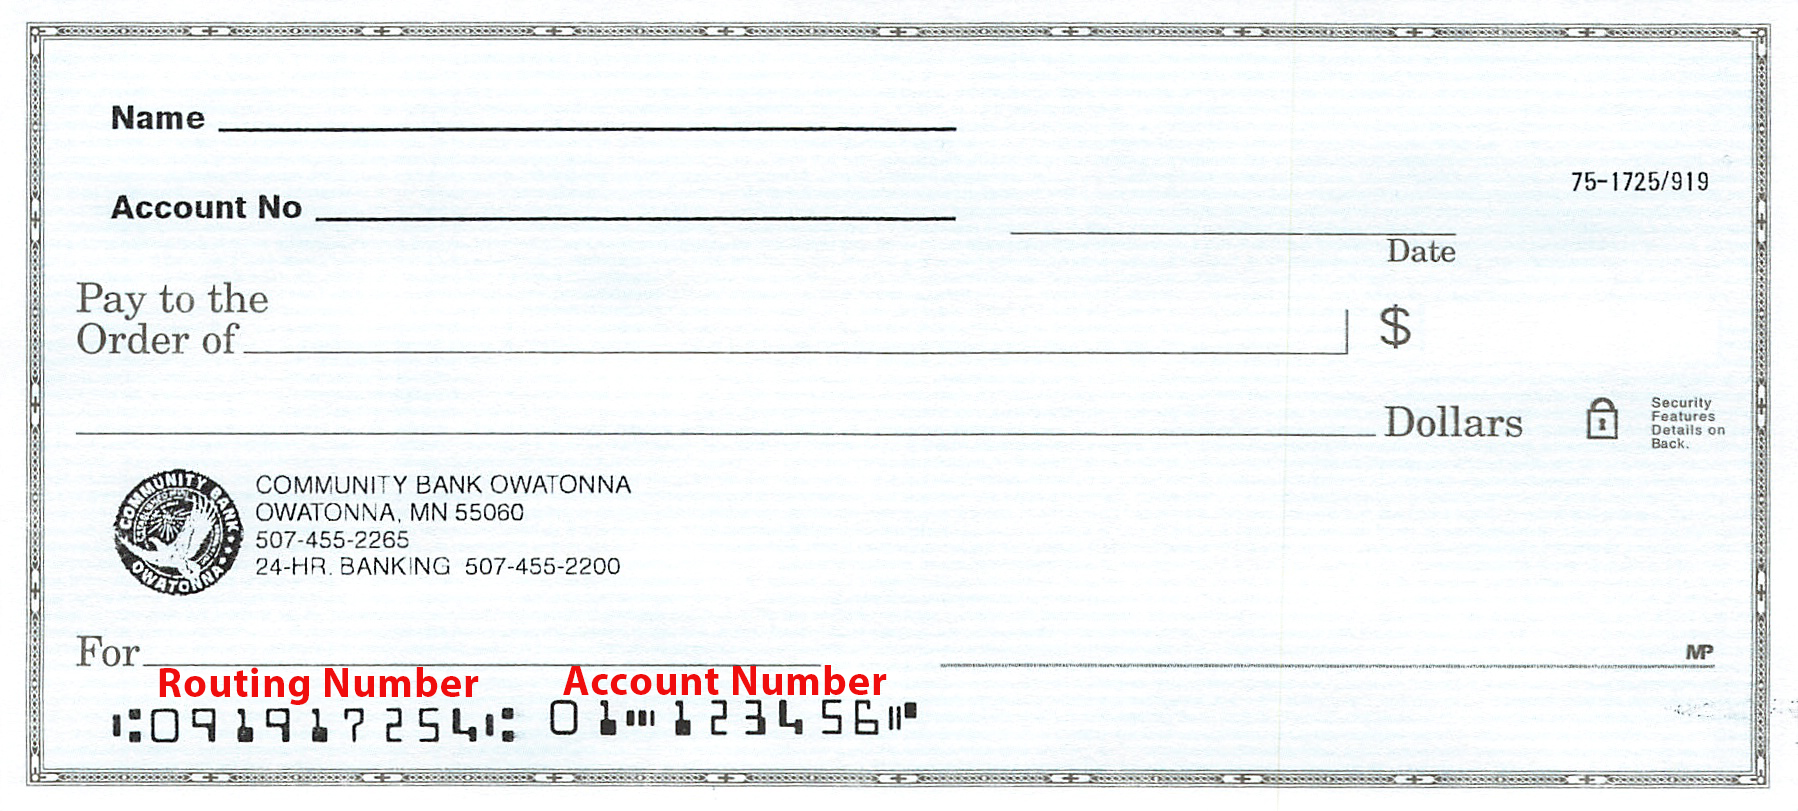 Sample Community Bank Owatonna check